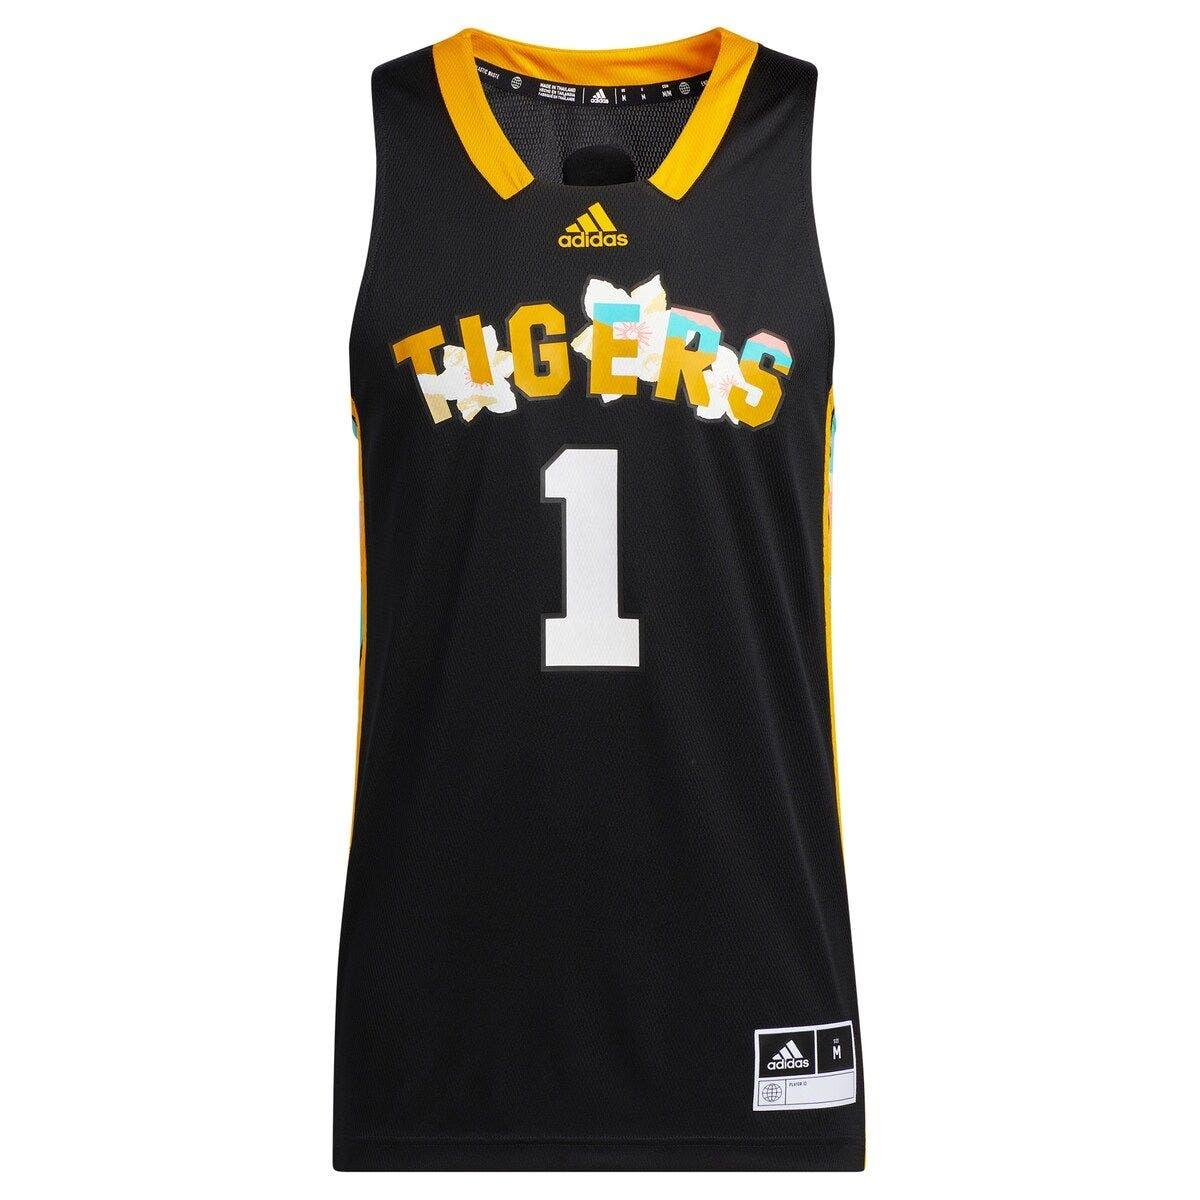 Men's adidas #1 Khaki Washington Huskies Honoring Black Excellence Basketball  Jersey